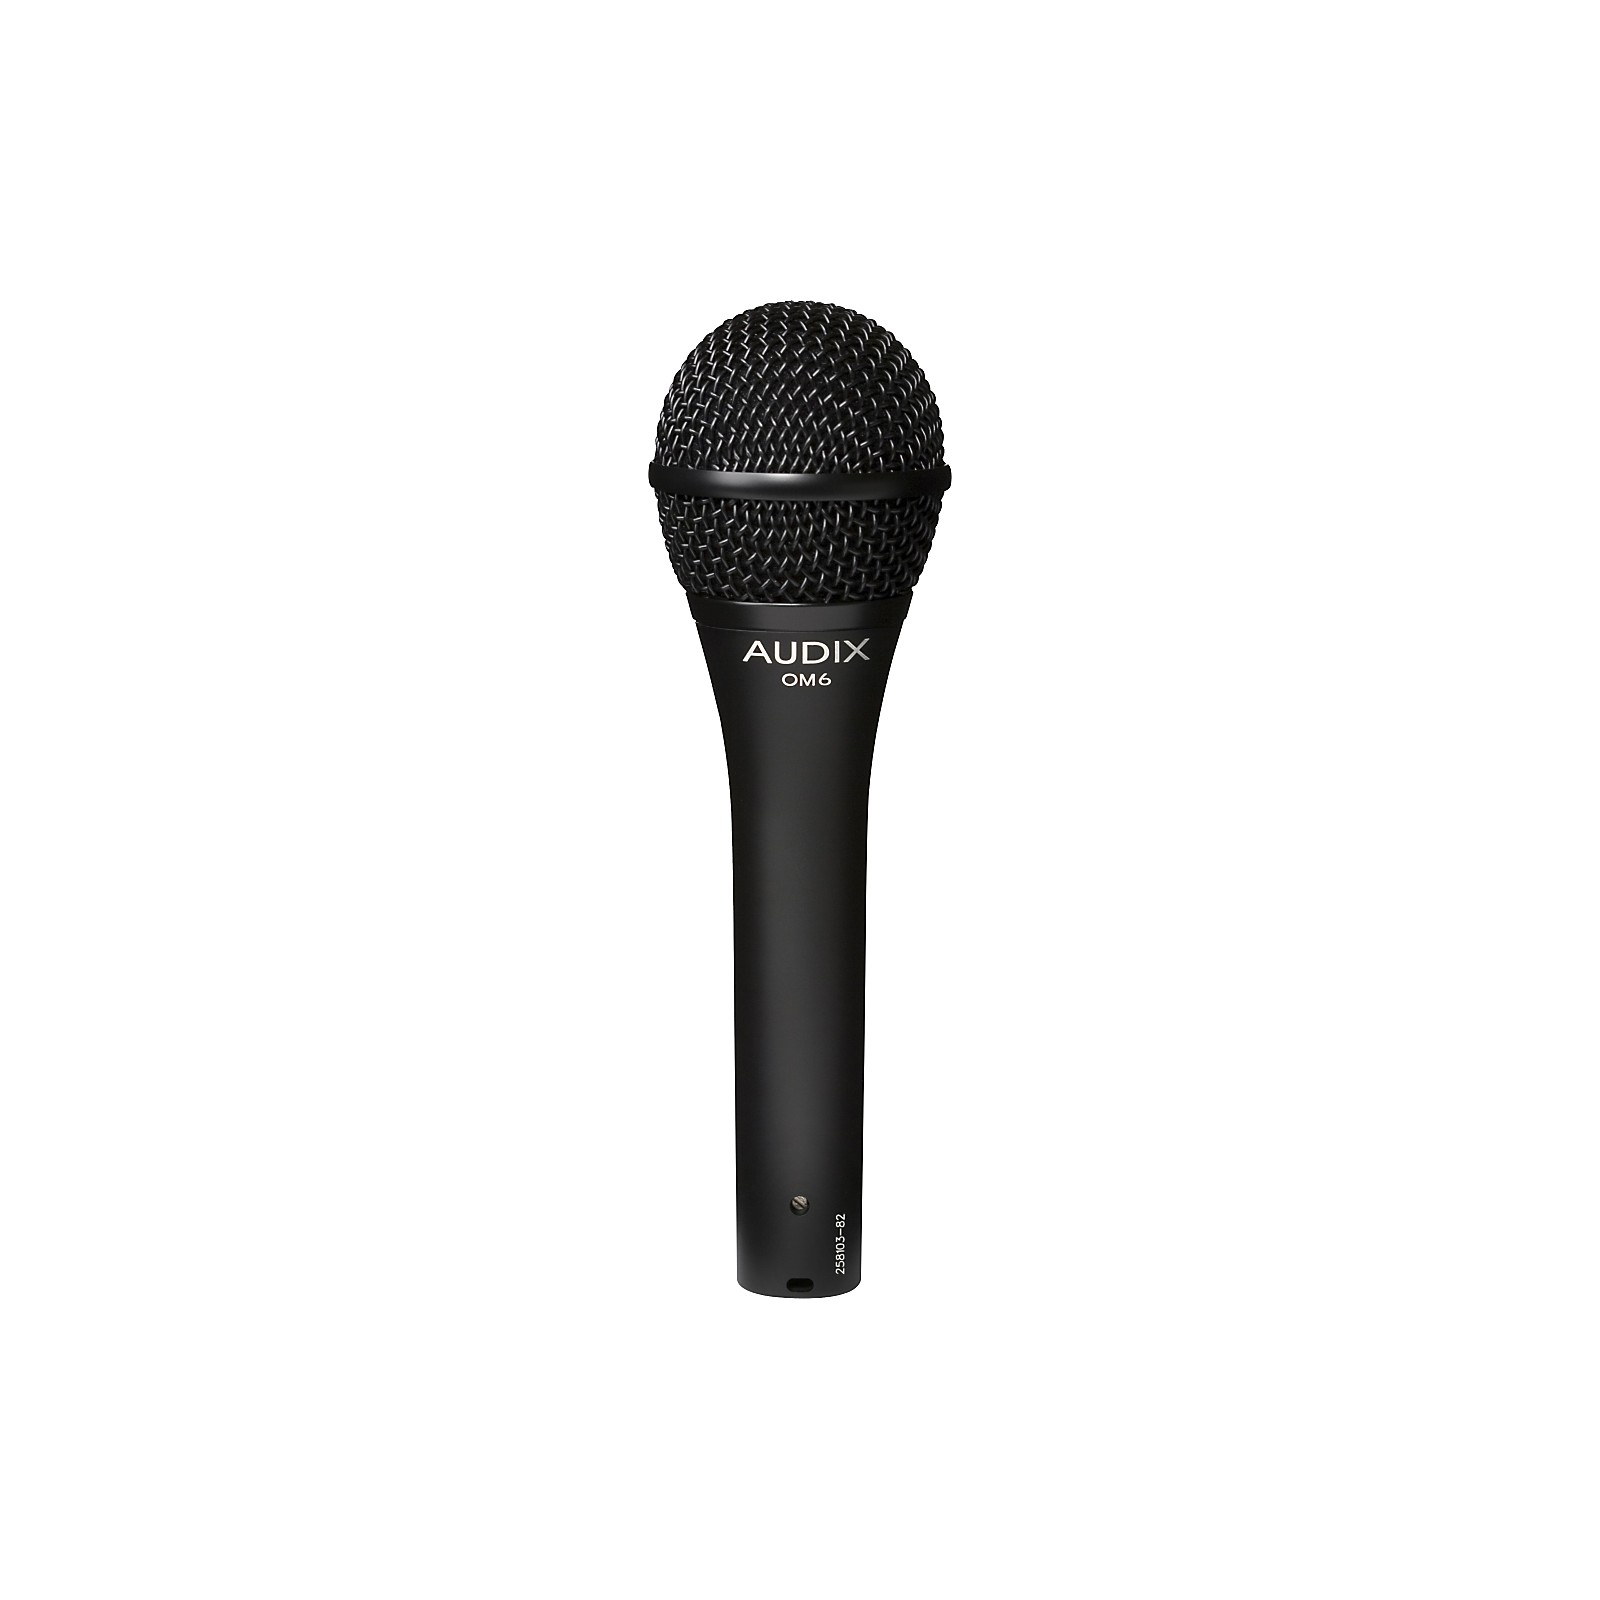 Audix OM6 Dynamic Vocal Microphone | Musician's Friend